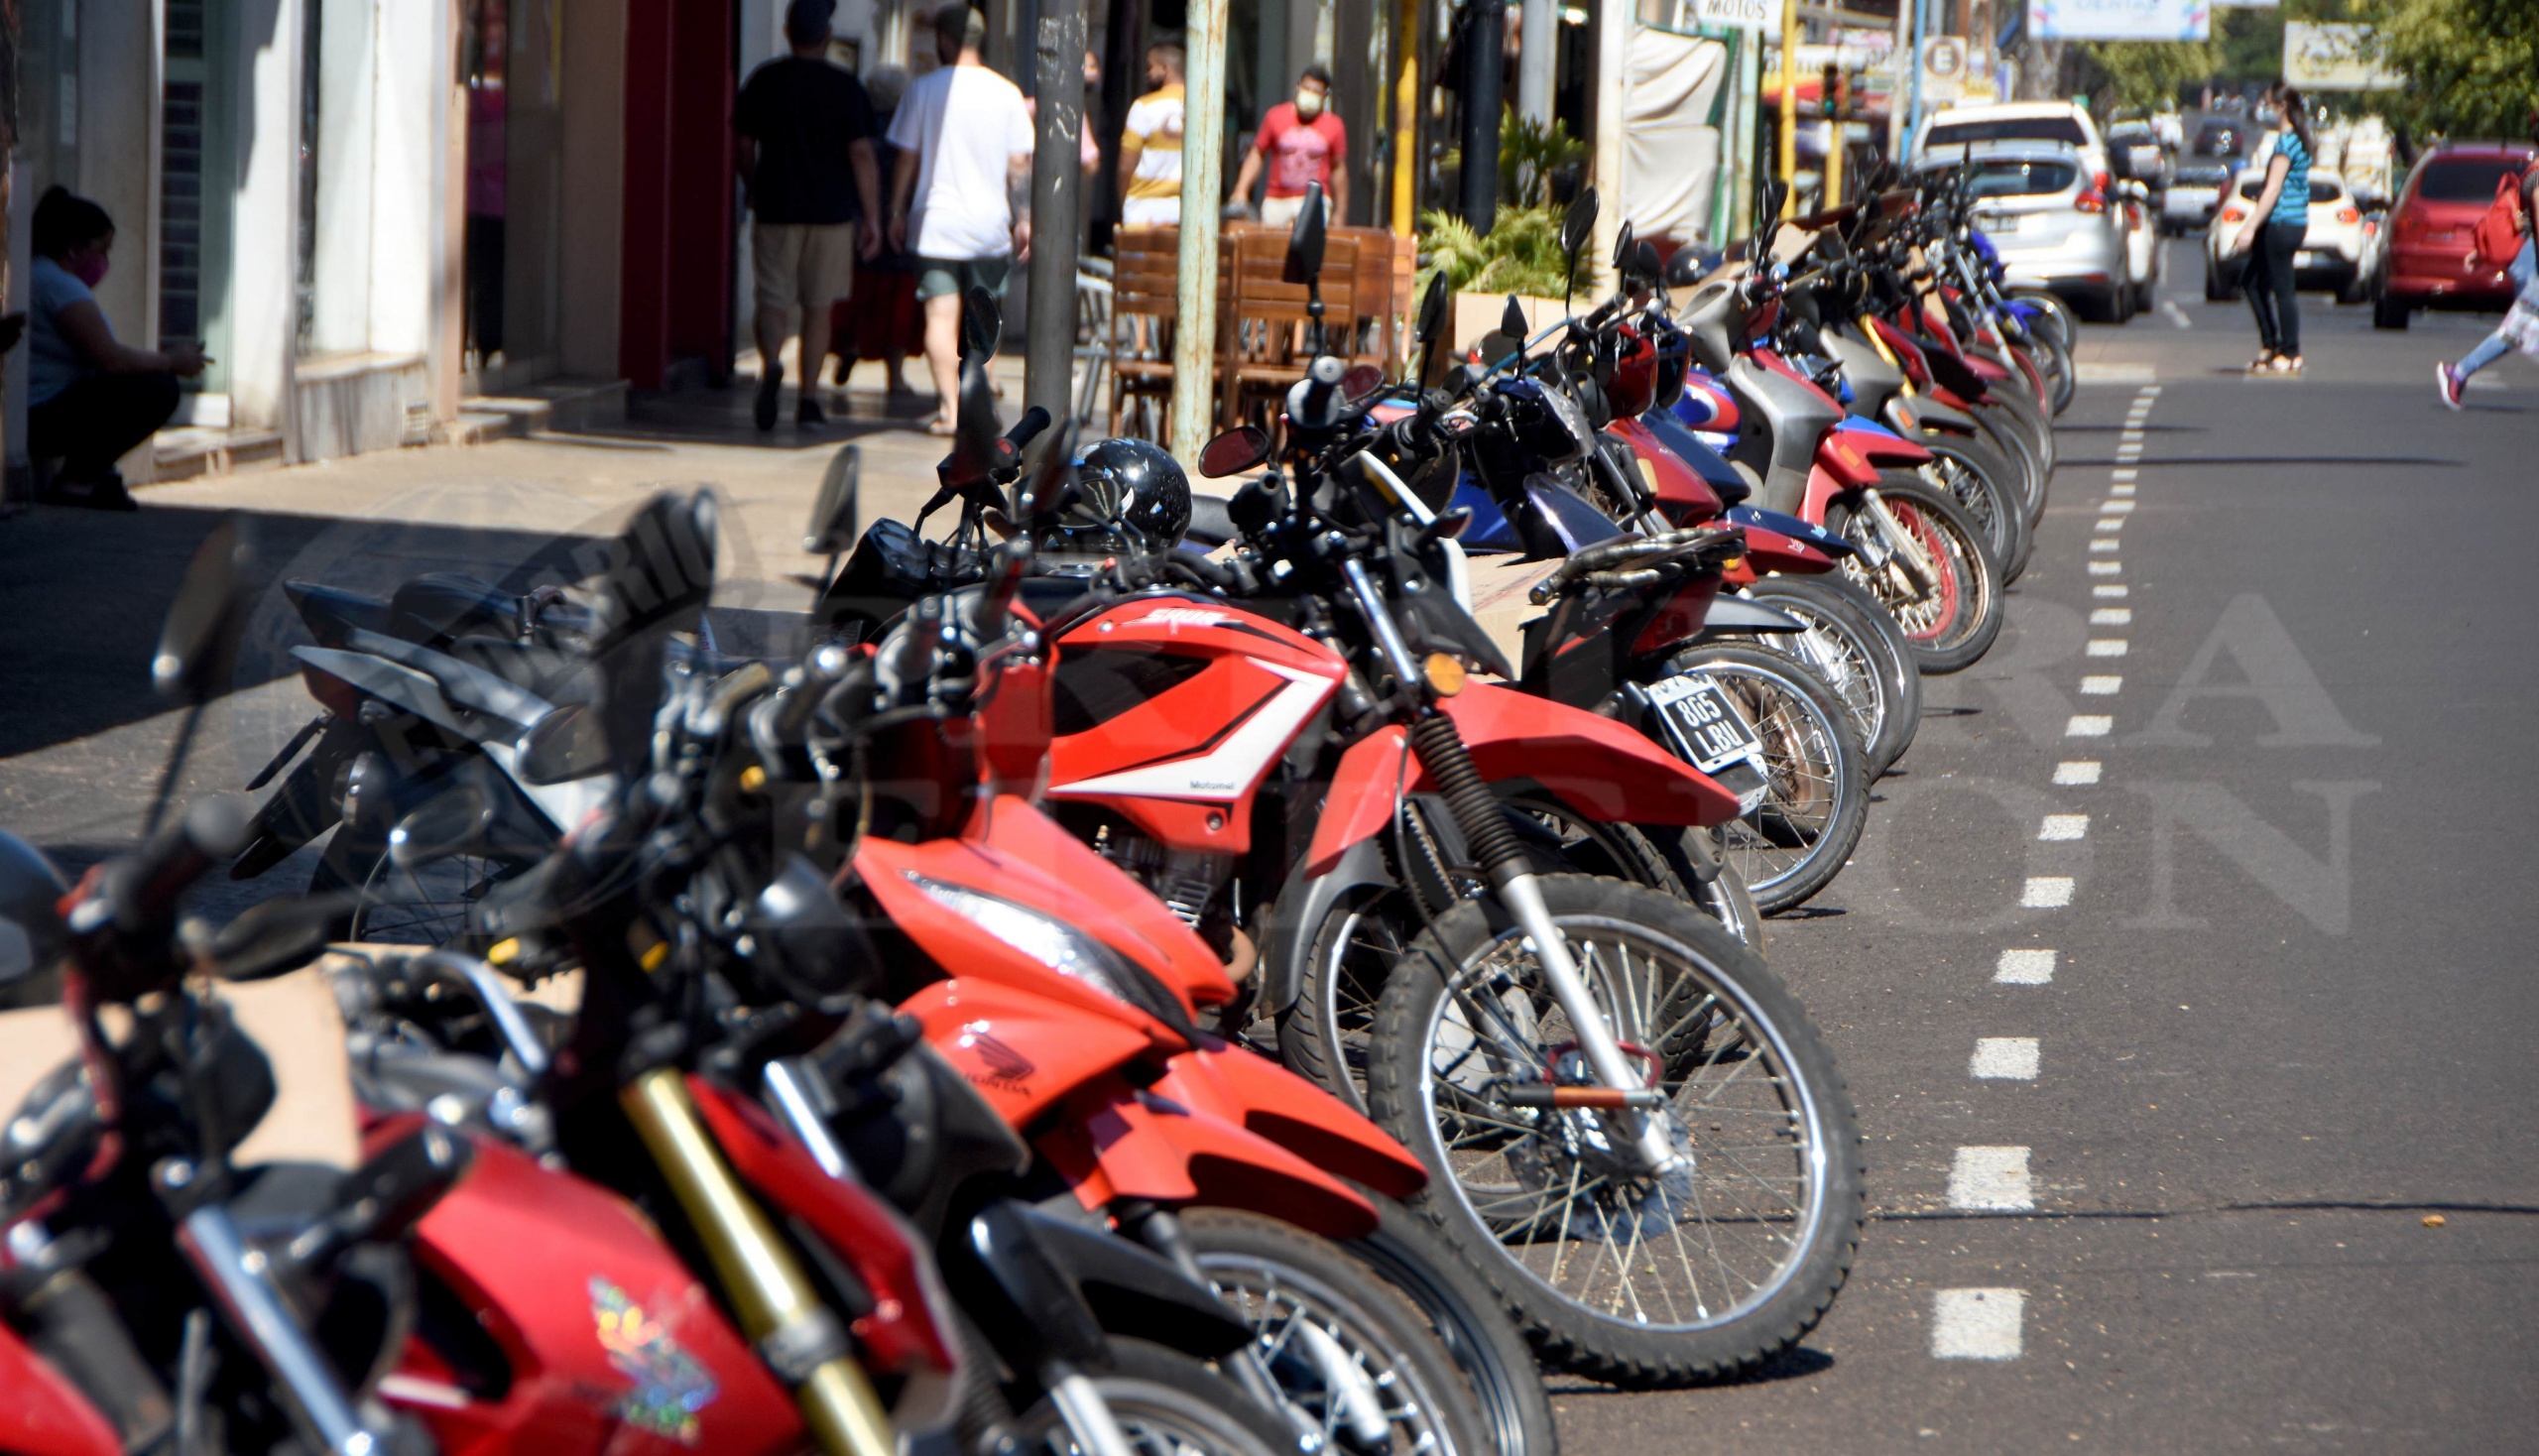 Venta de motos usadas creció 14,6 en octubre, según